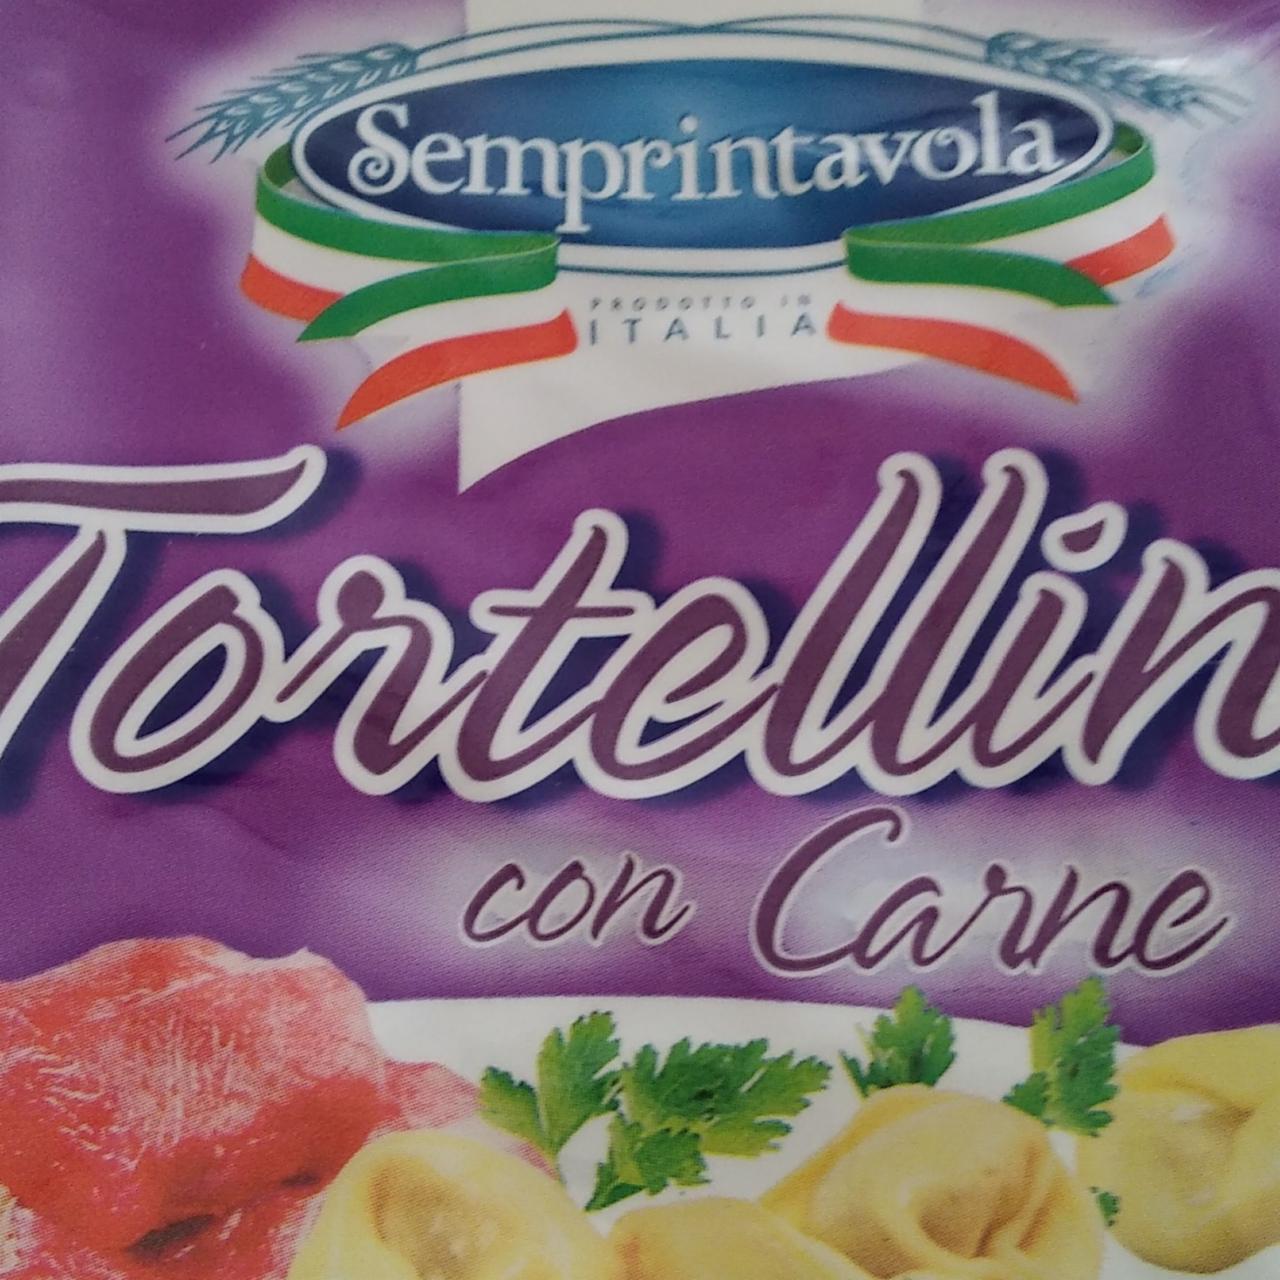 Fotografie - Tortellini con carne Semprintavola